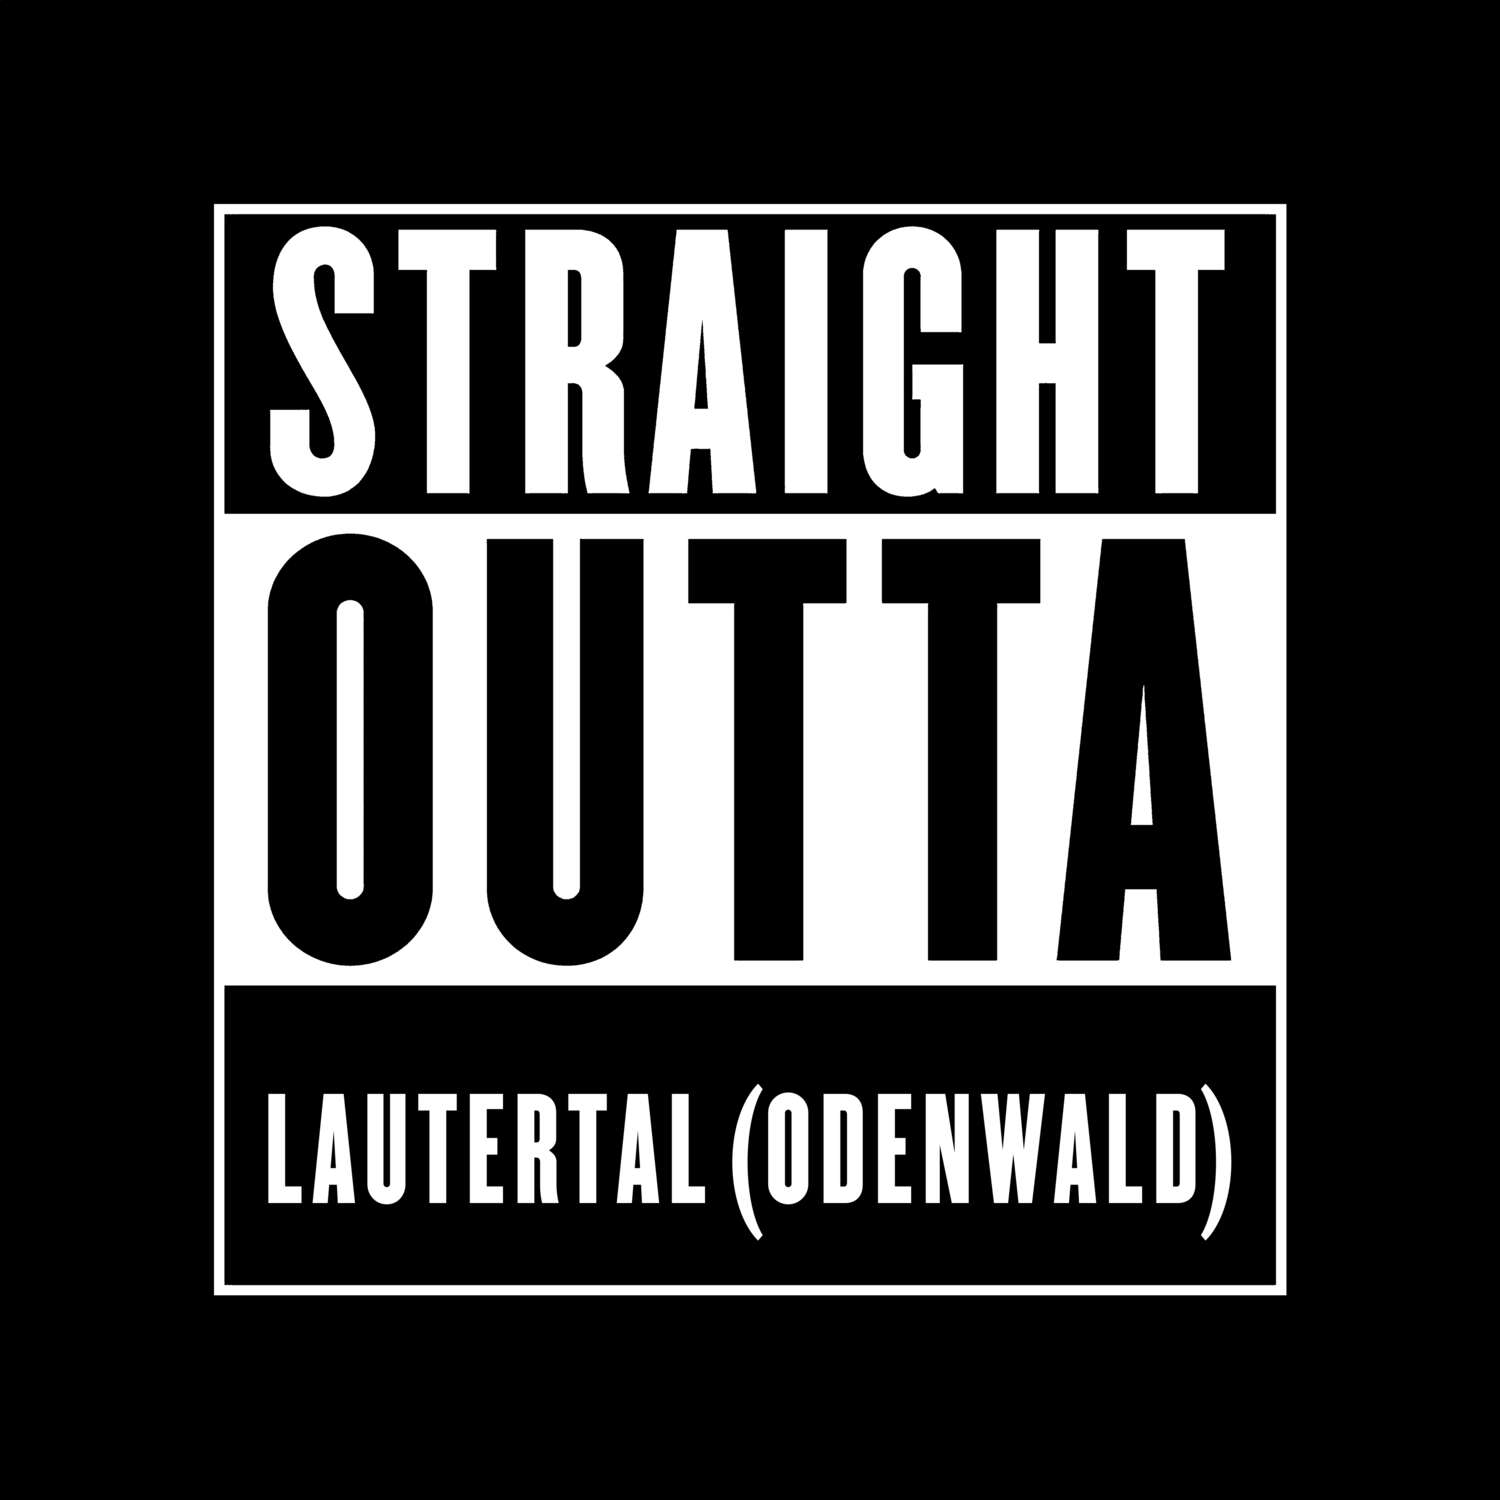 Lautertal (Odenwald) T-Shirt »Straight Outta«